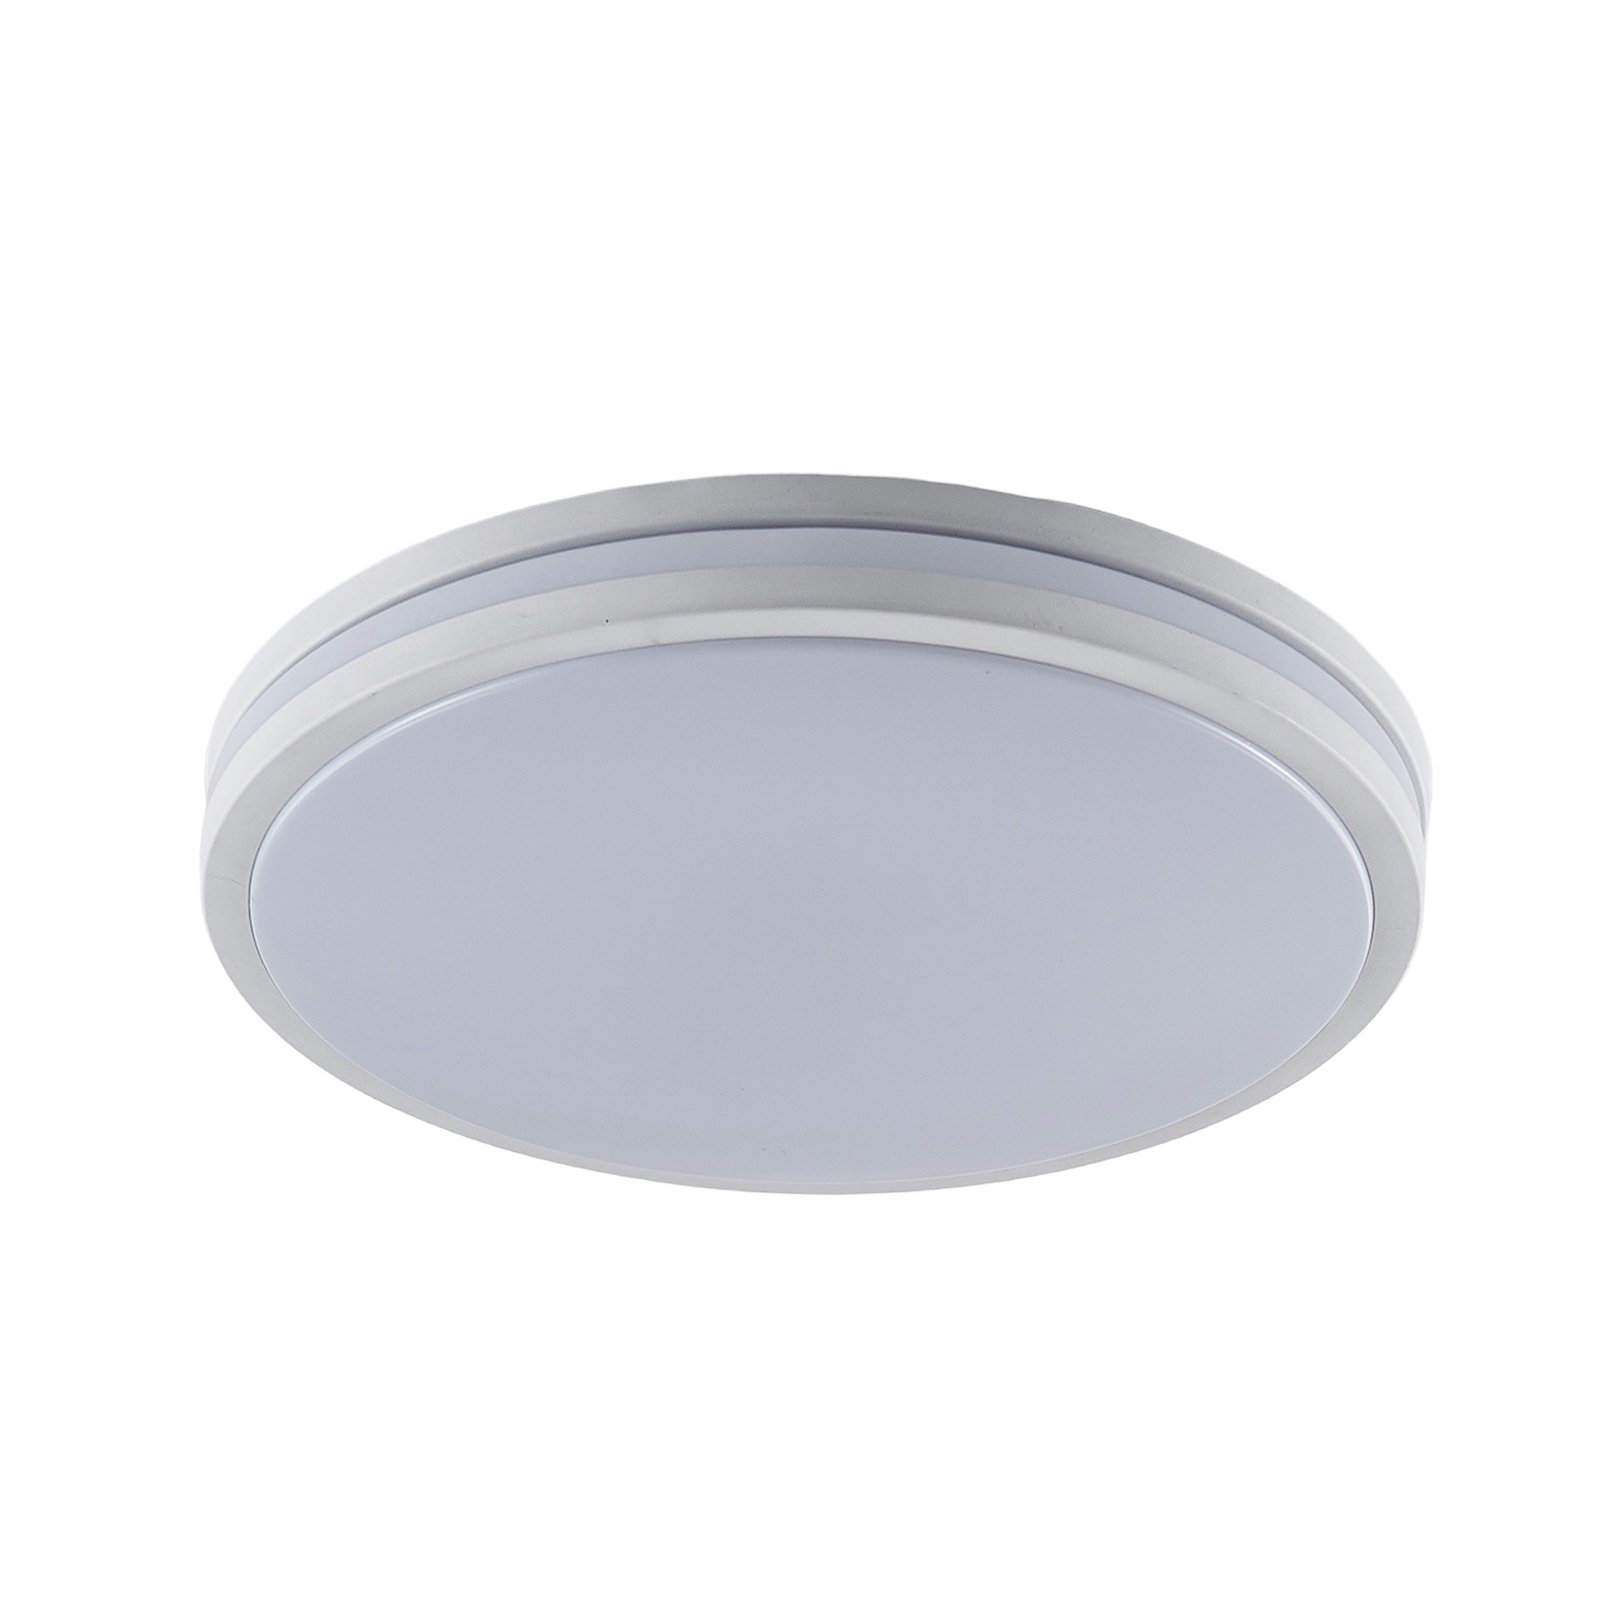 LED-taklampe Arnim hvit, rund form, IP44